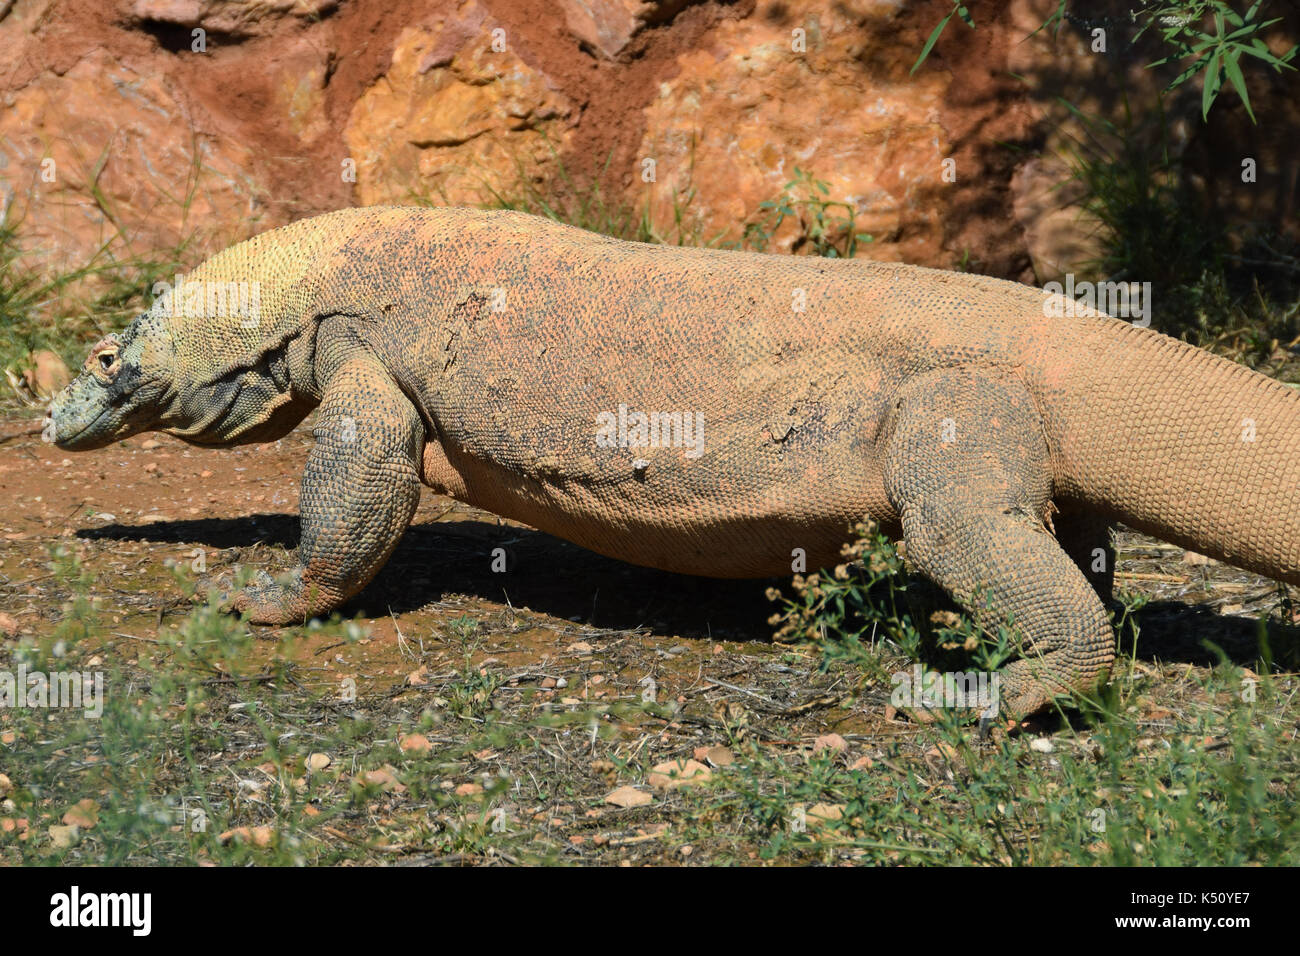 Komodo dragon big lizard reptile. Wild animal. Stock Photo